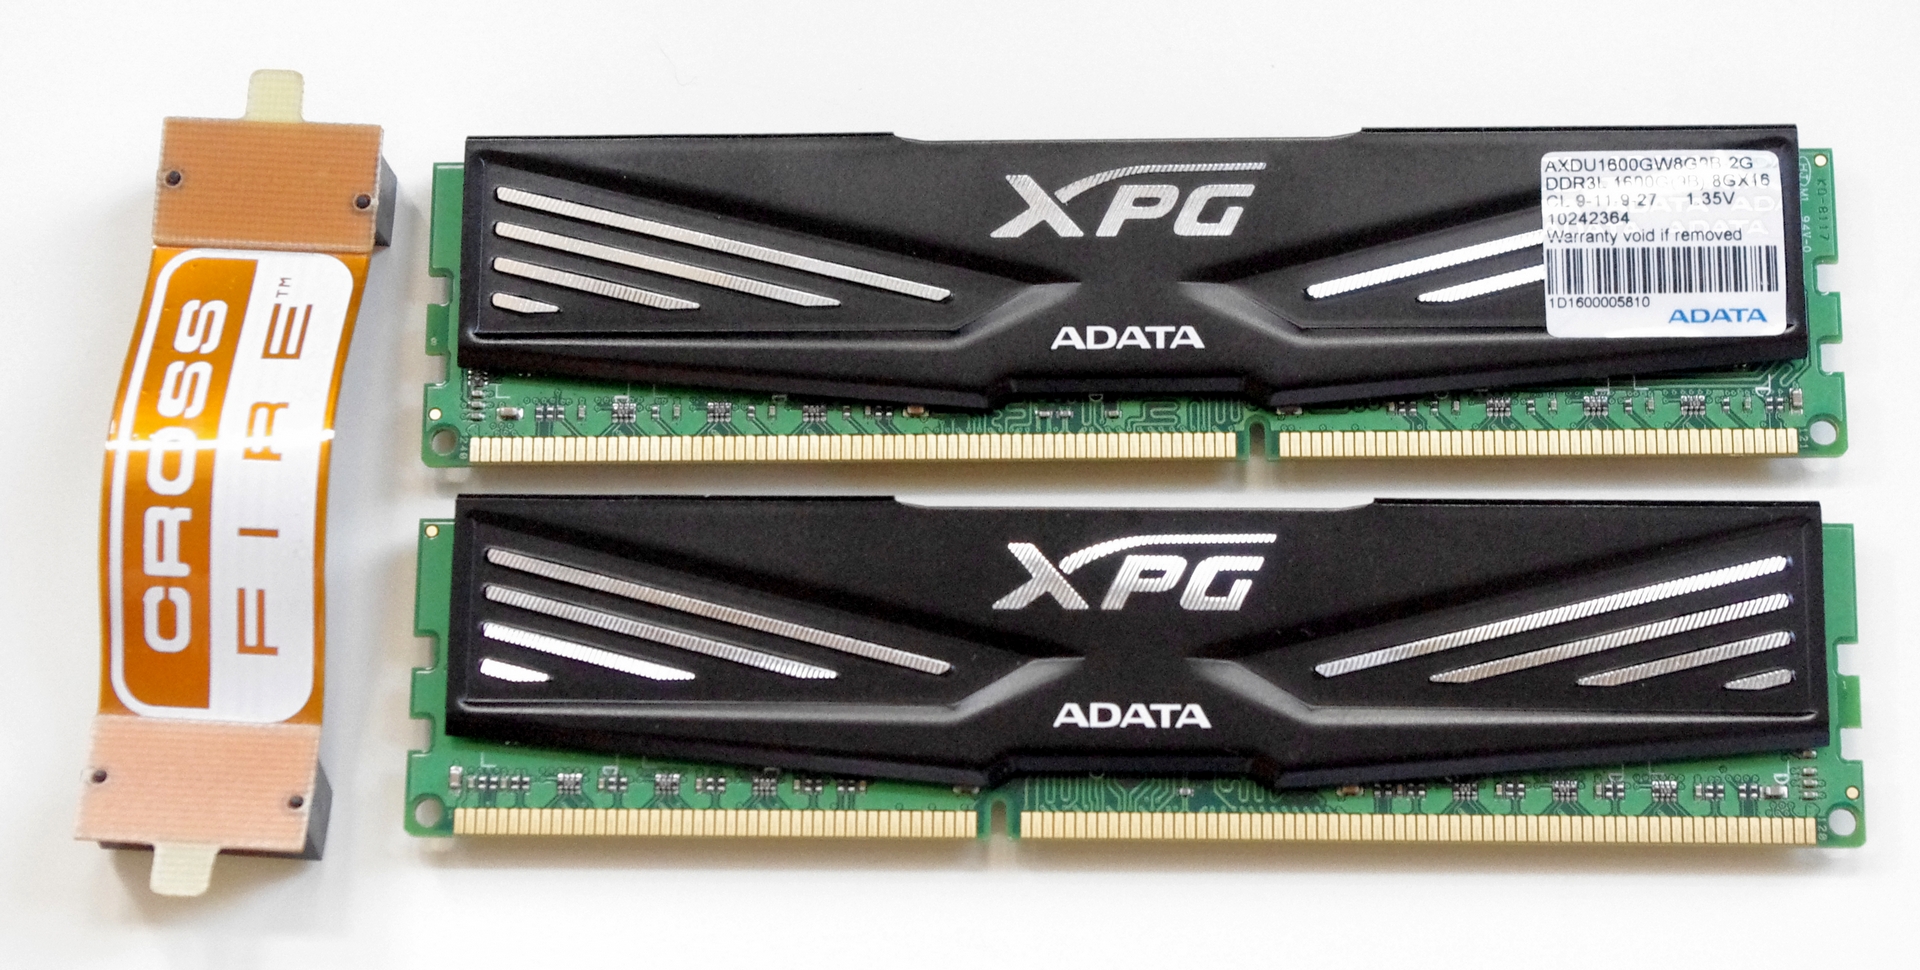 Proponer opción Cambiable ADATA XPG V1.0 Low Voltage Review: 2x8 GB at DDR3L-1600 9-11-9 1.35 V